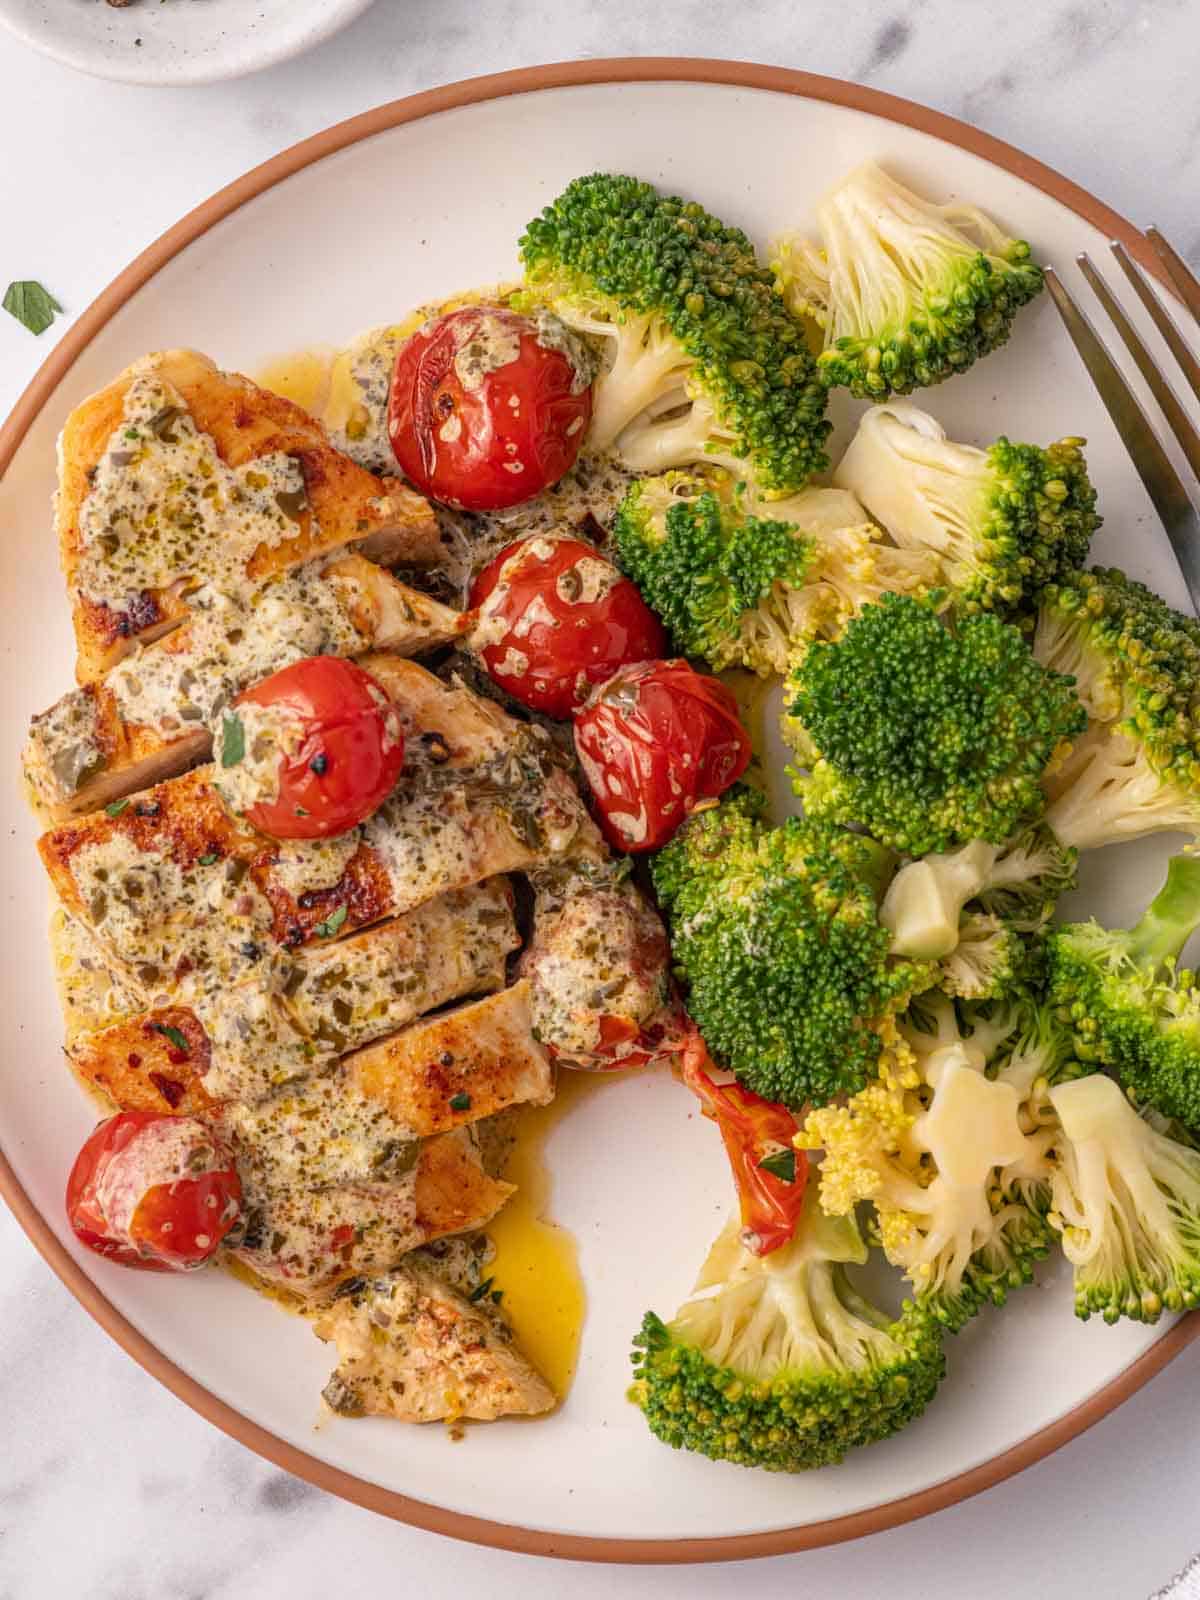 A plate with sliced pesto cream chicken and broccoli.